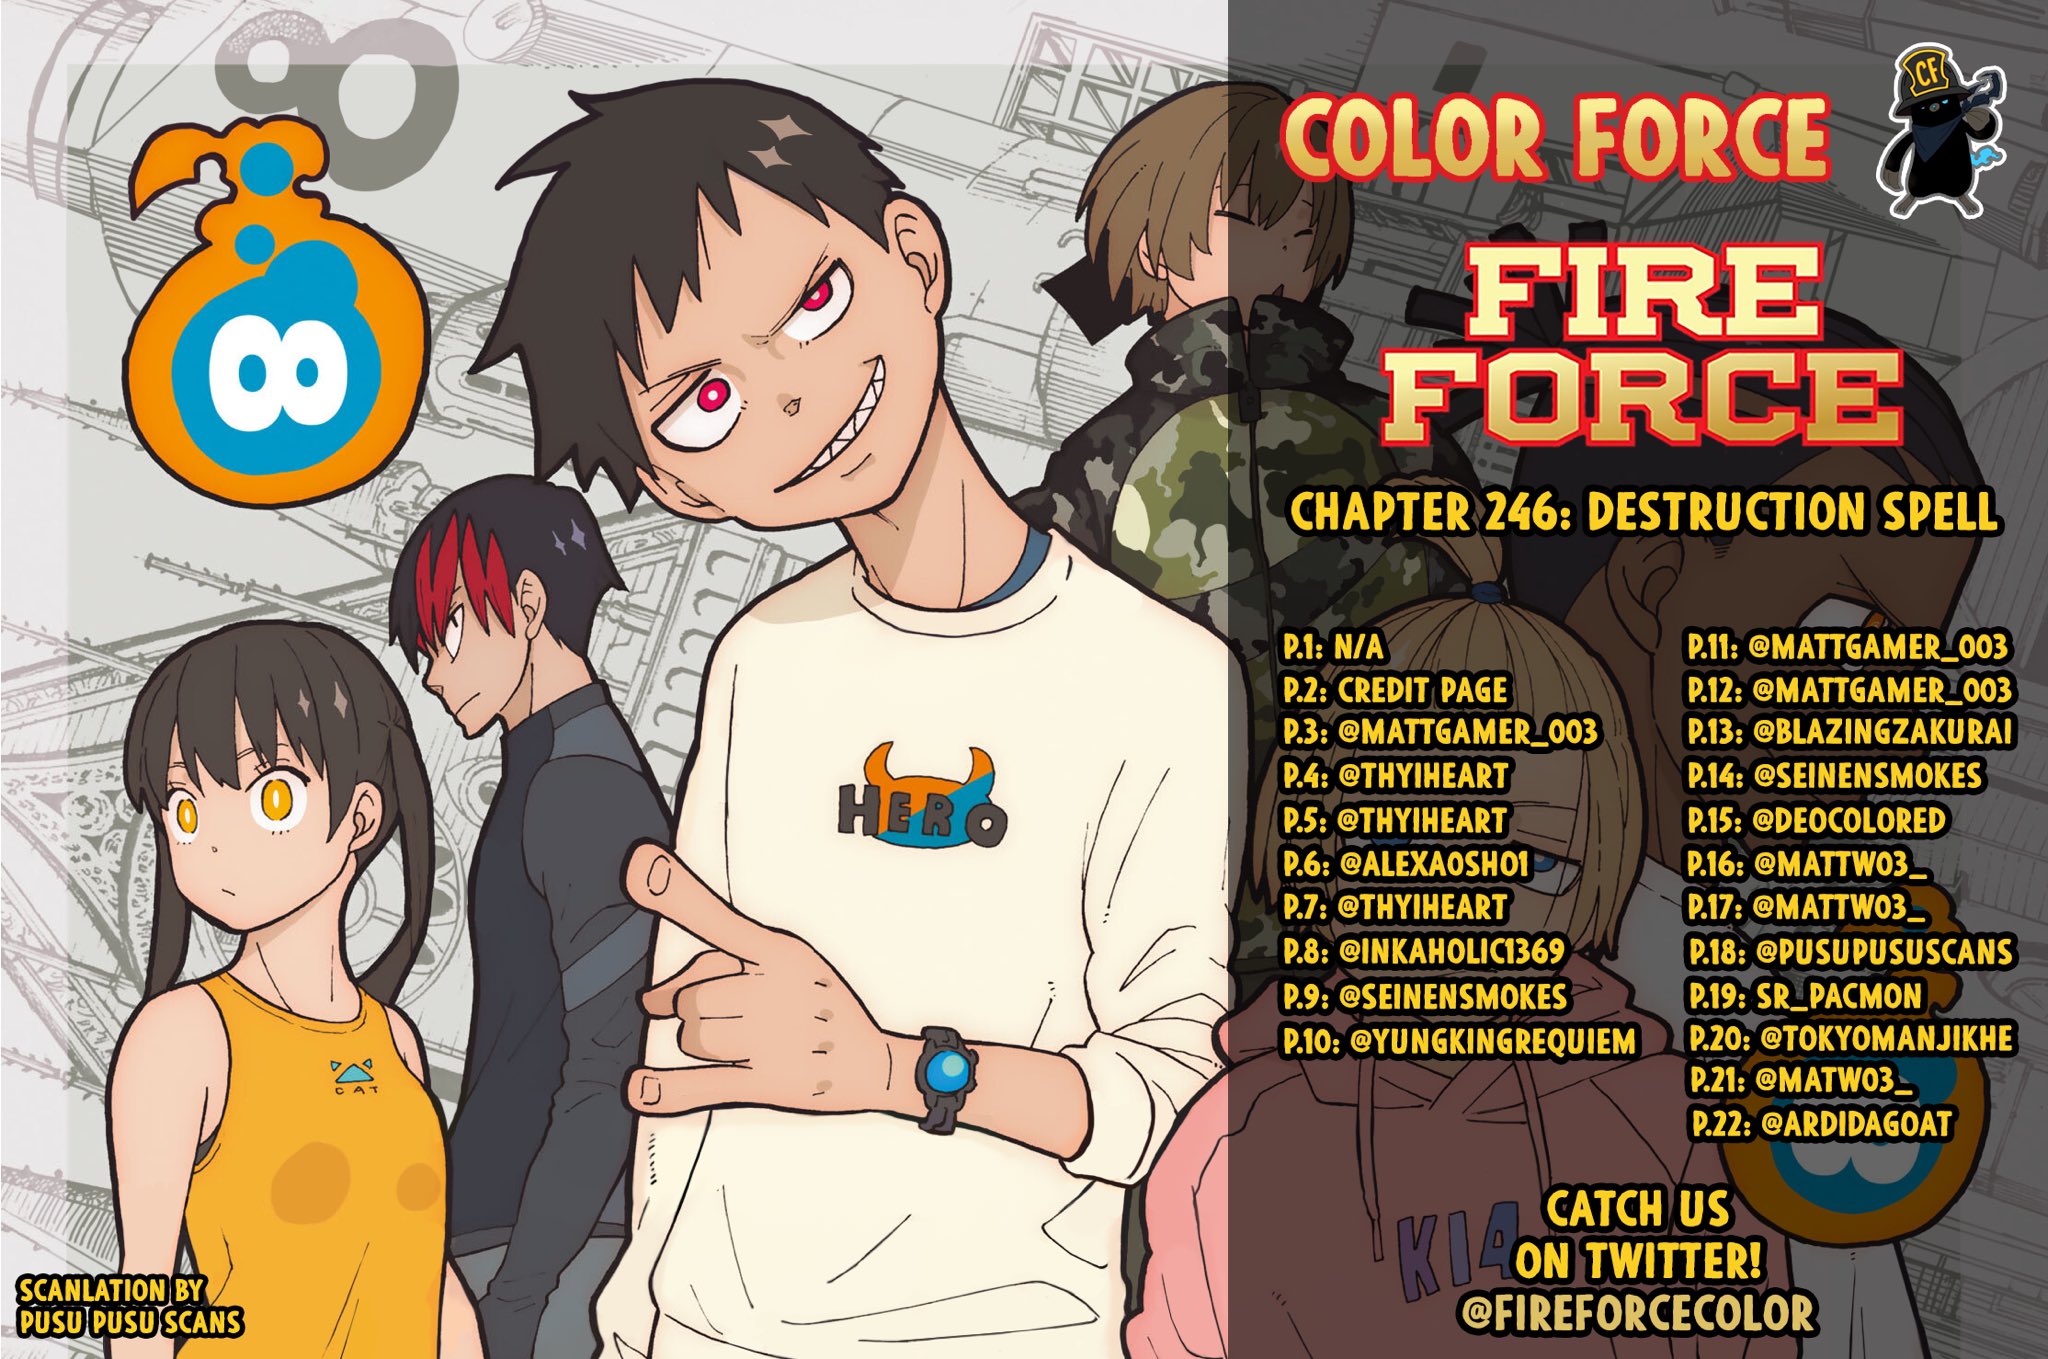 Fire Force Manga Volume 22